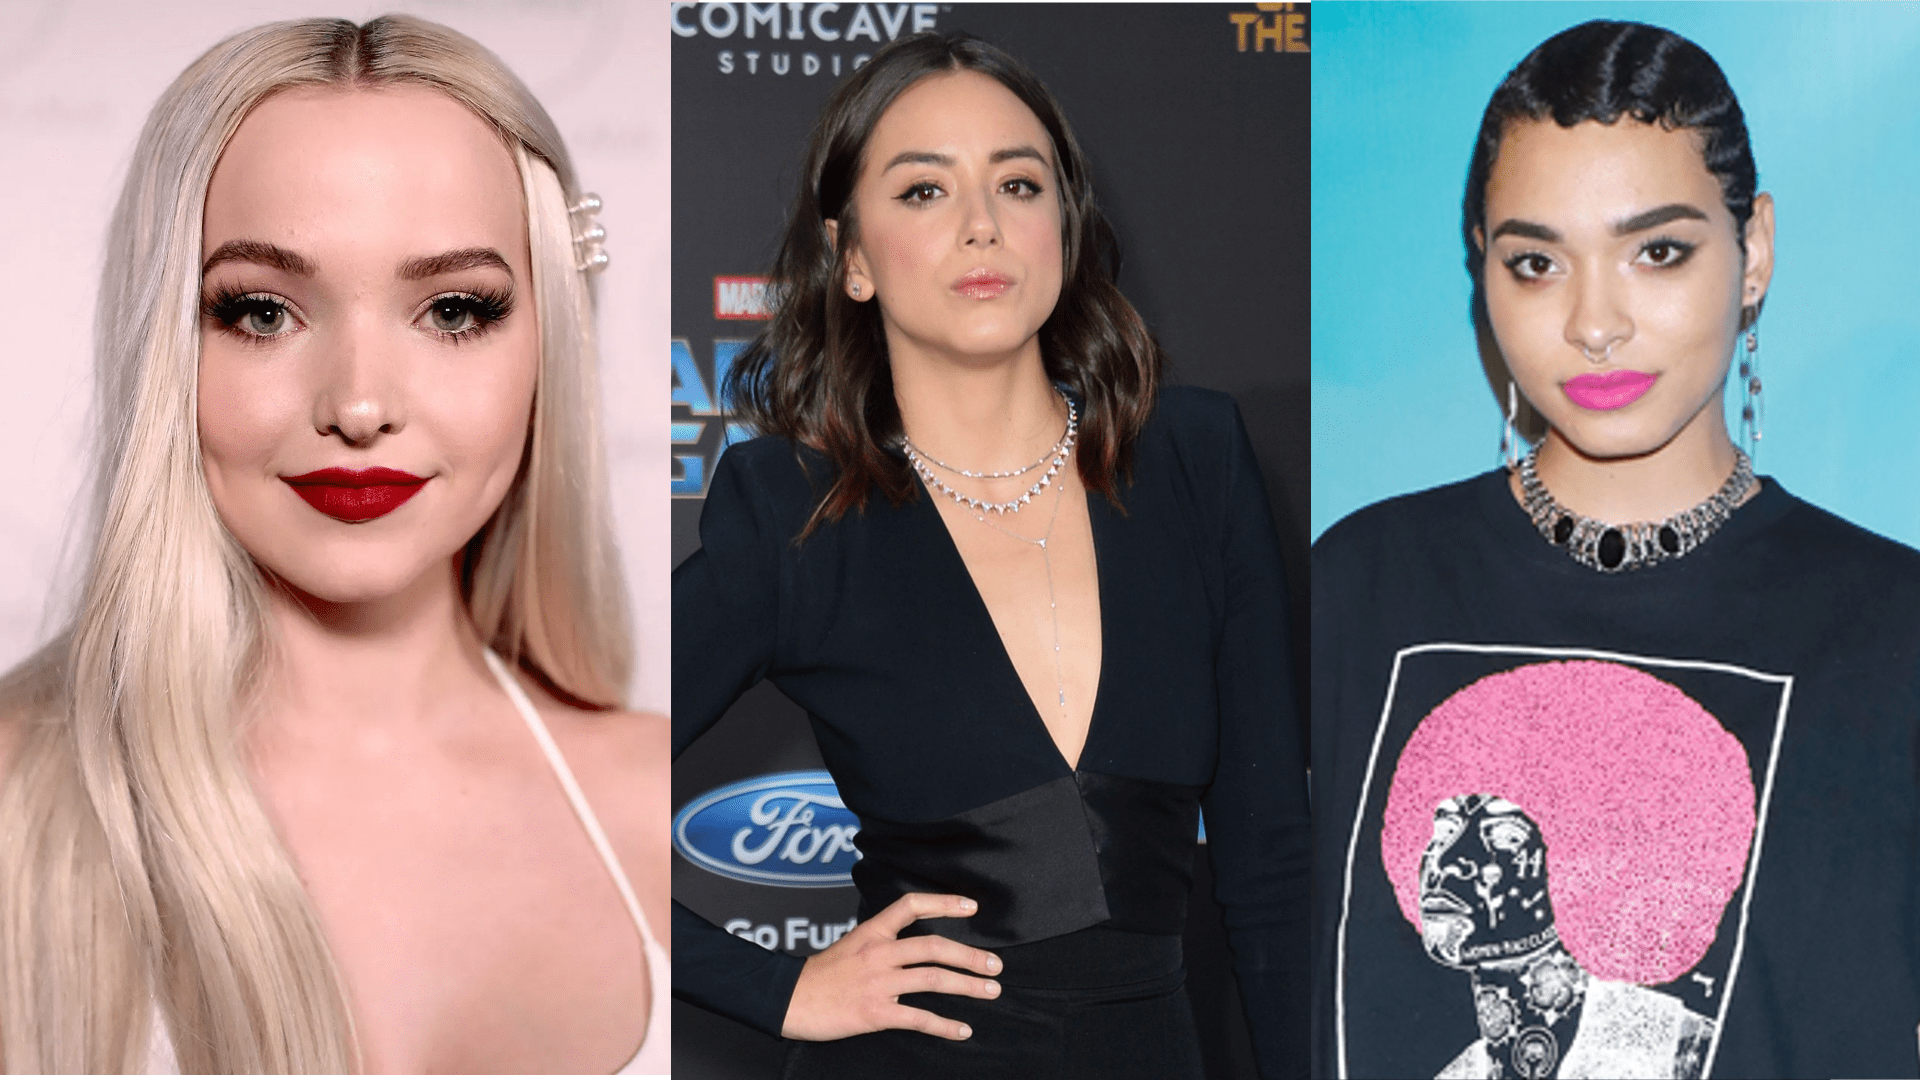 CW’s Powerpuff Girls “Sequel” Casts Leads